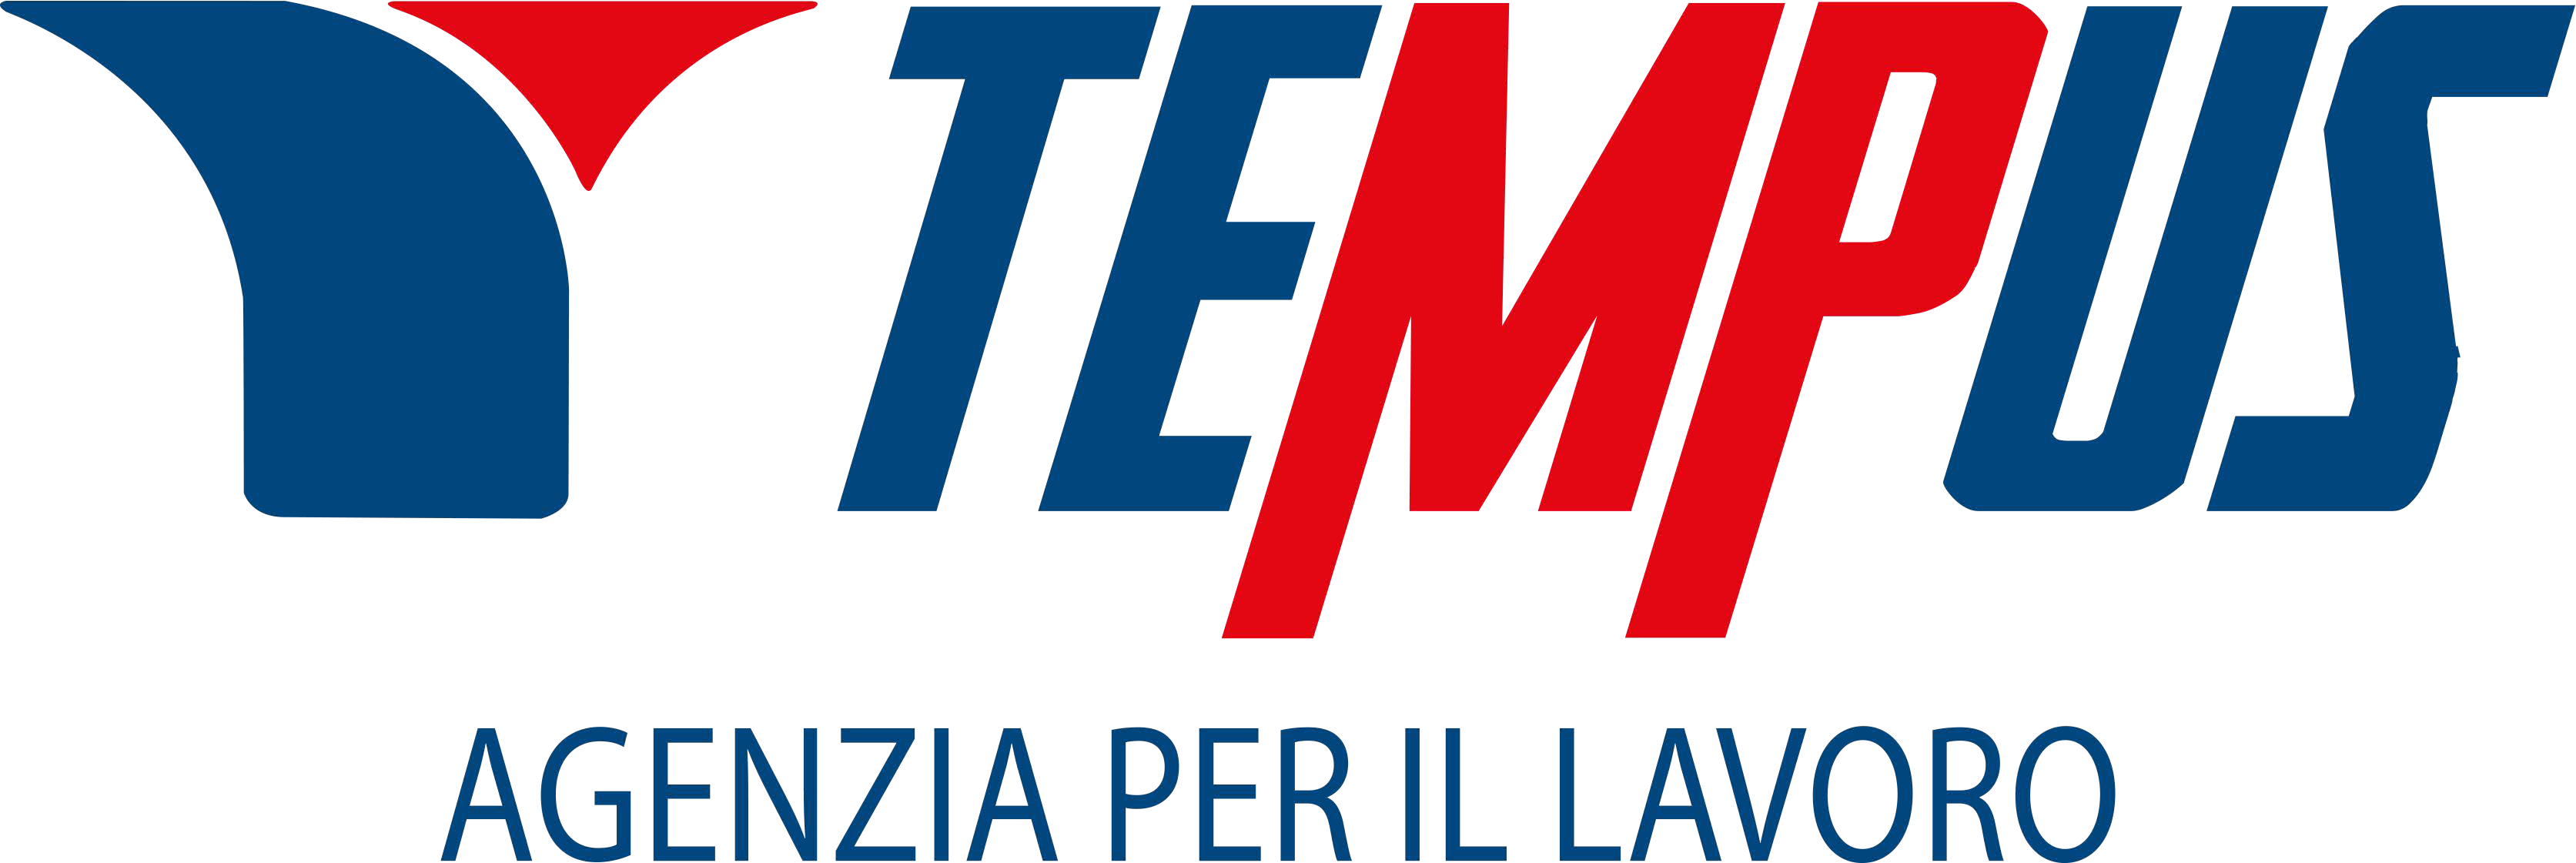 mediatica-logo